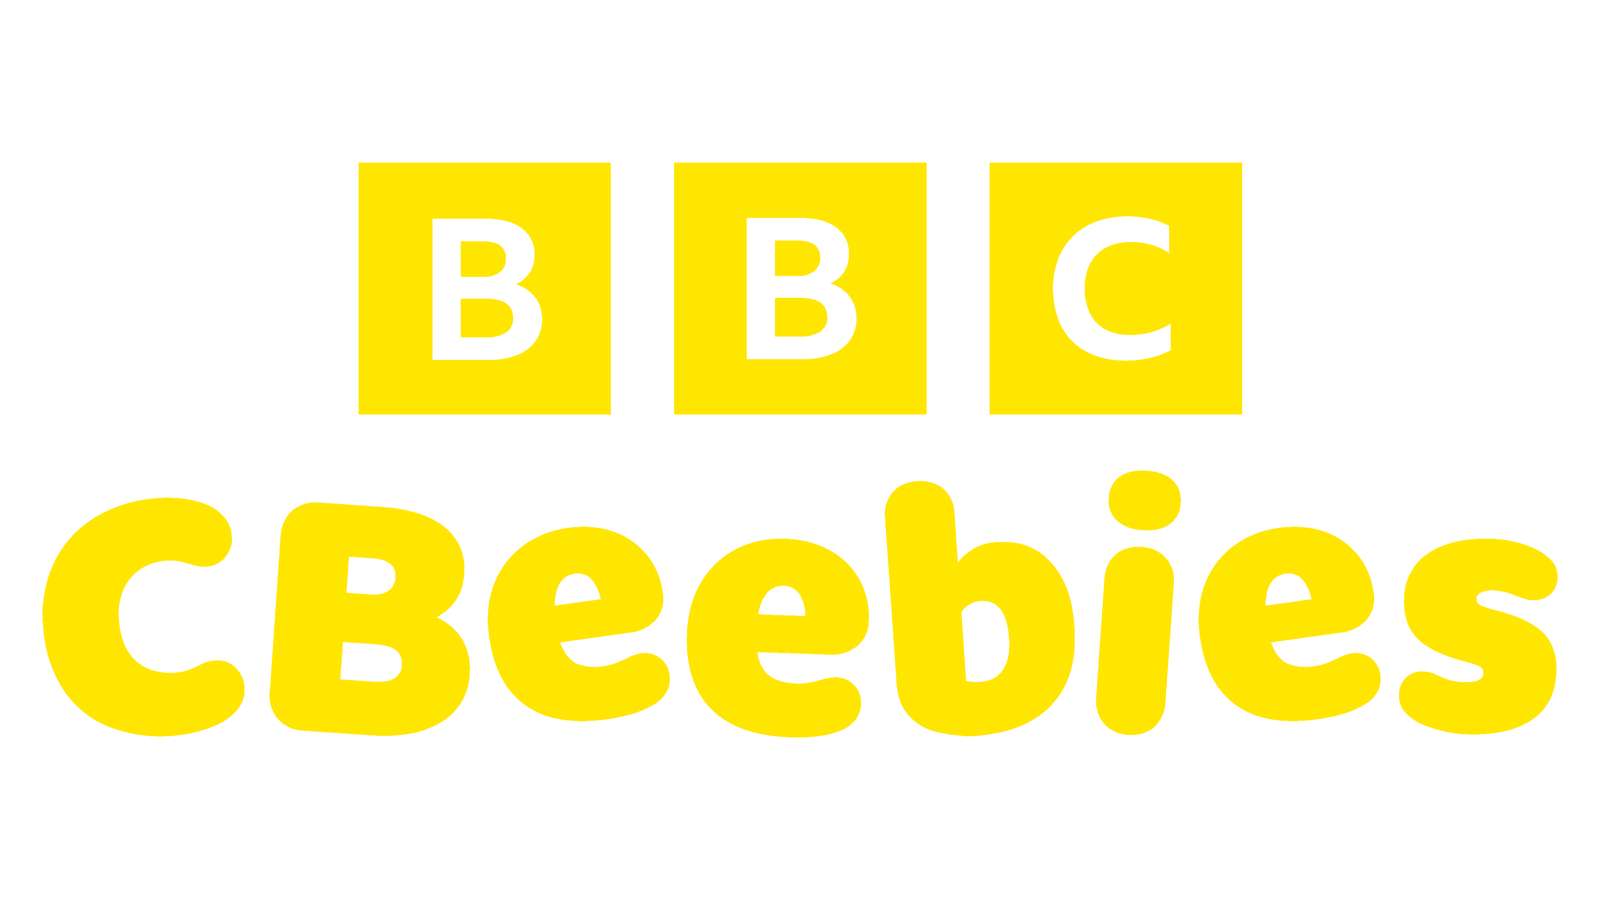 Cbeebies-Logo Online-Puzzle